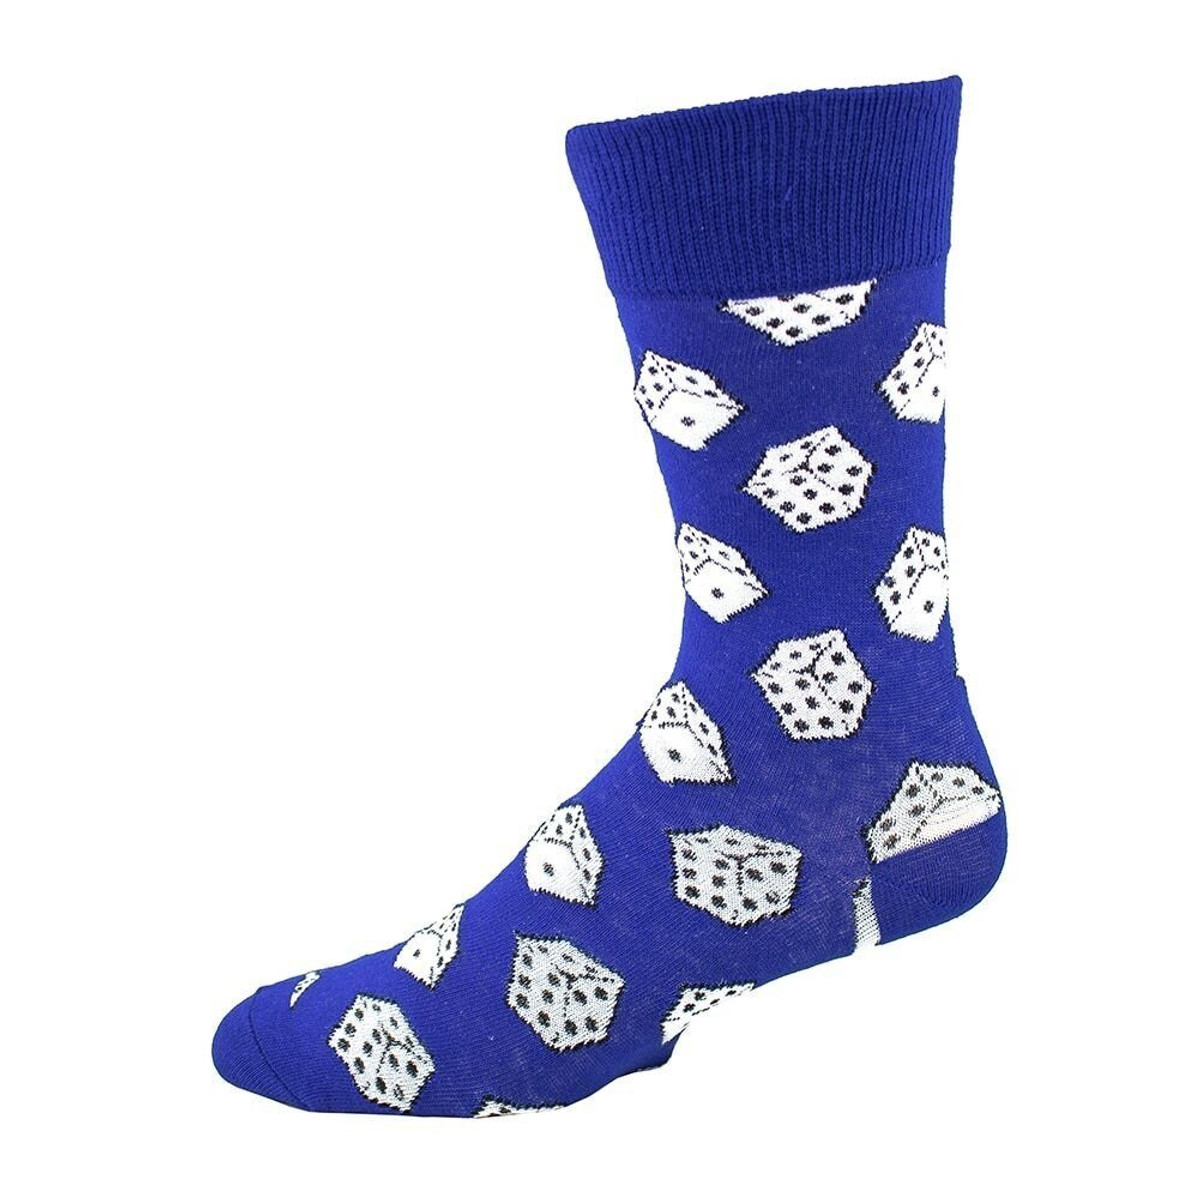 Men's Dice Pattern Crew Novelty Socks - Blue